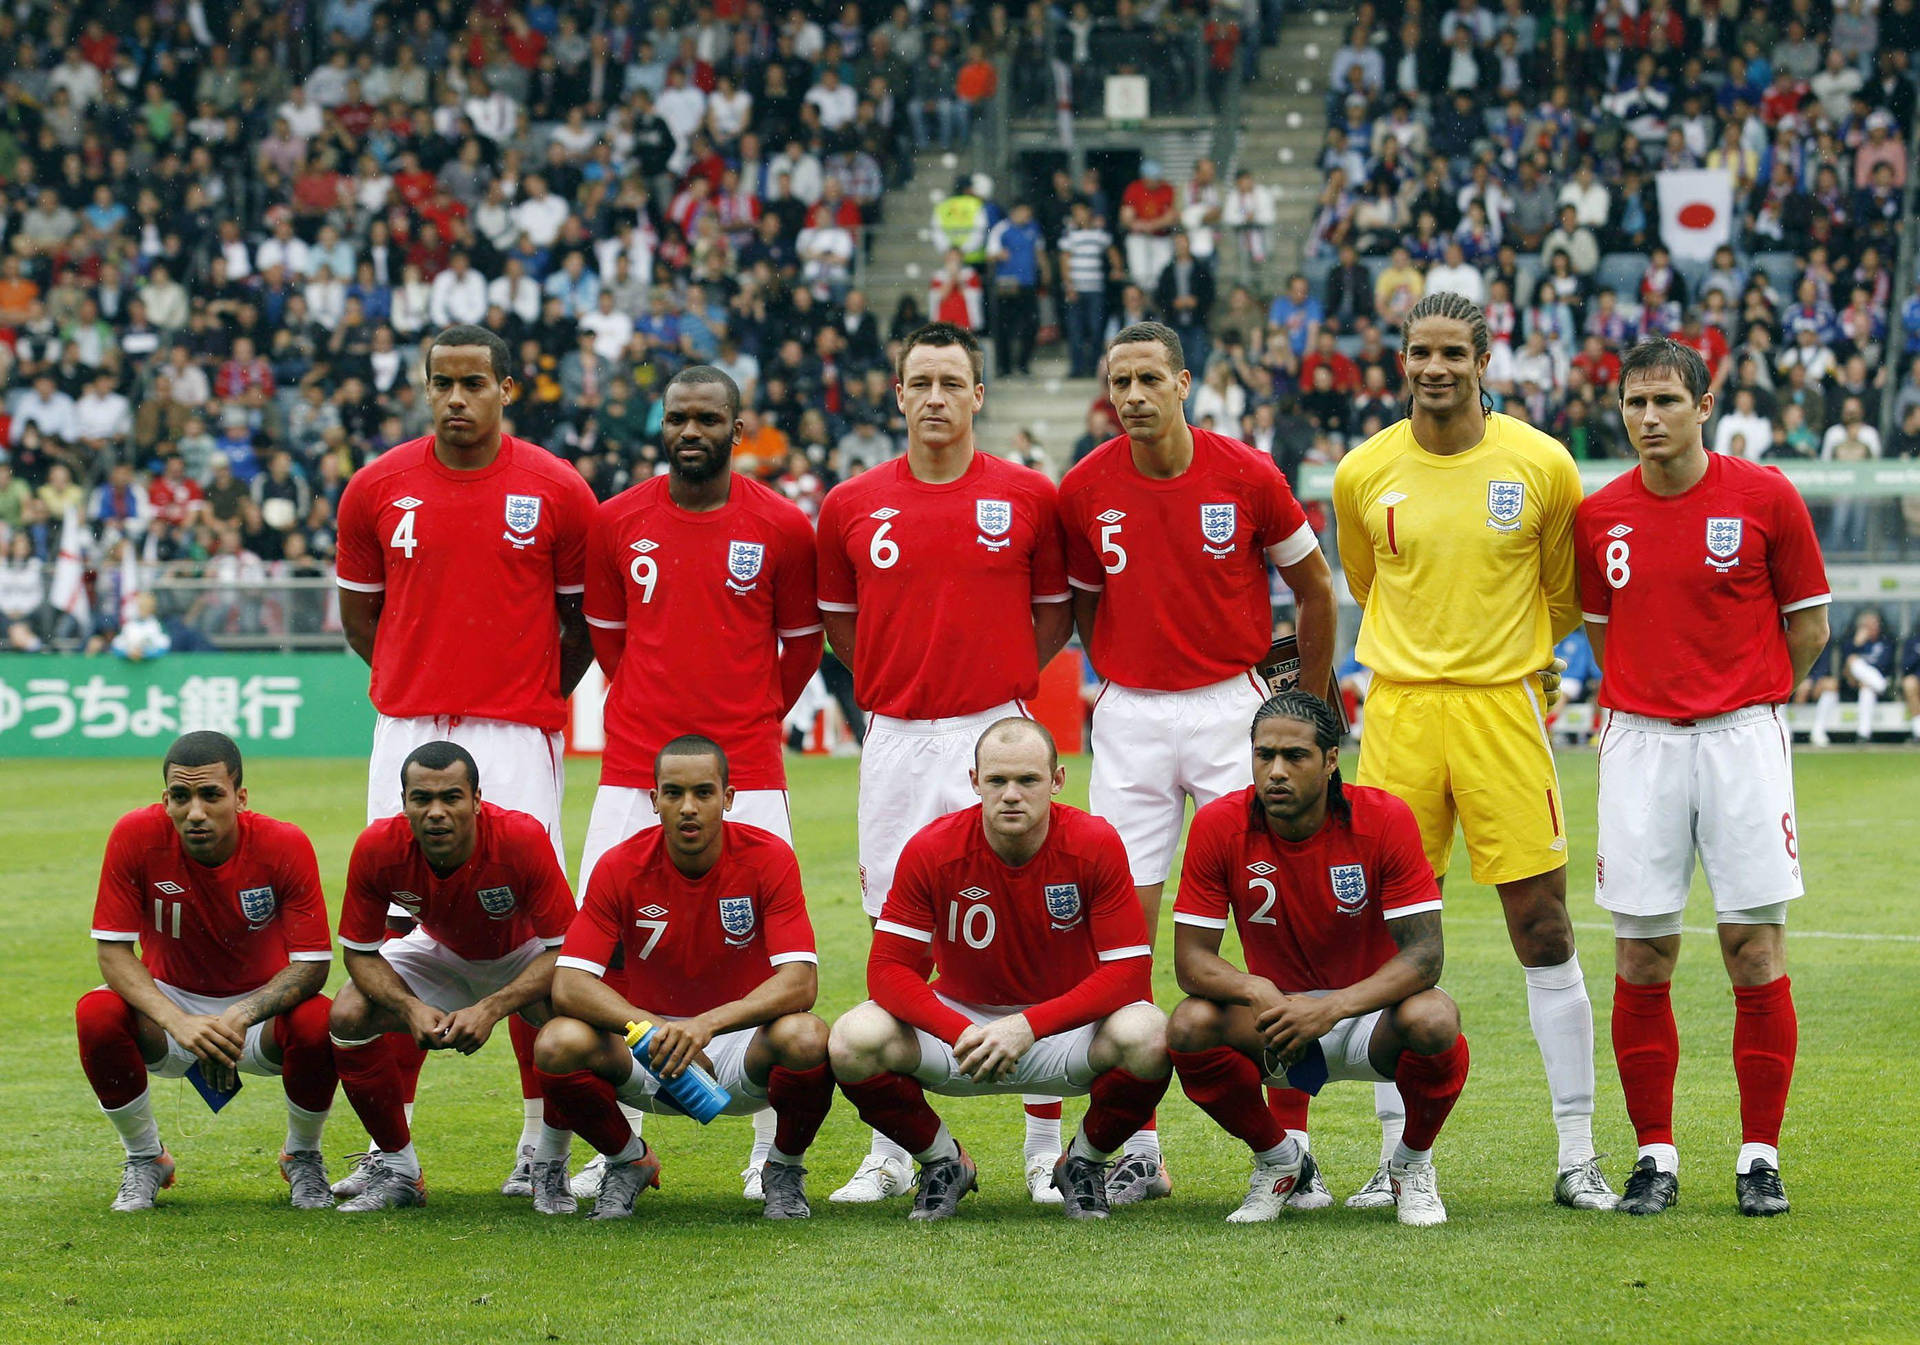 England National Football Team 2010 FIFA World Cup Wallpaper